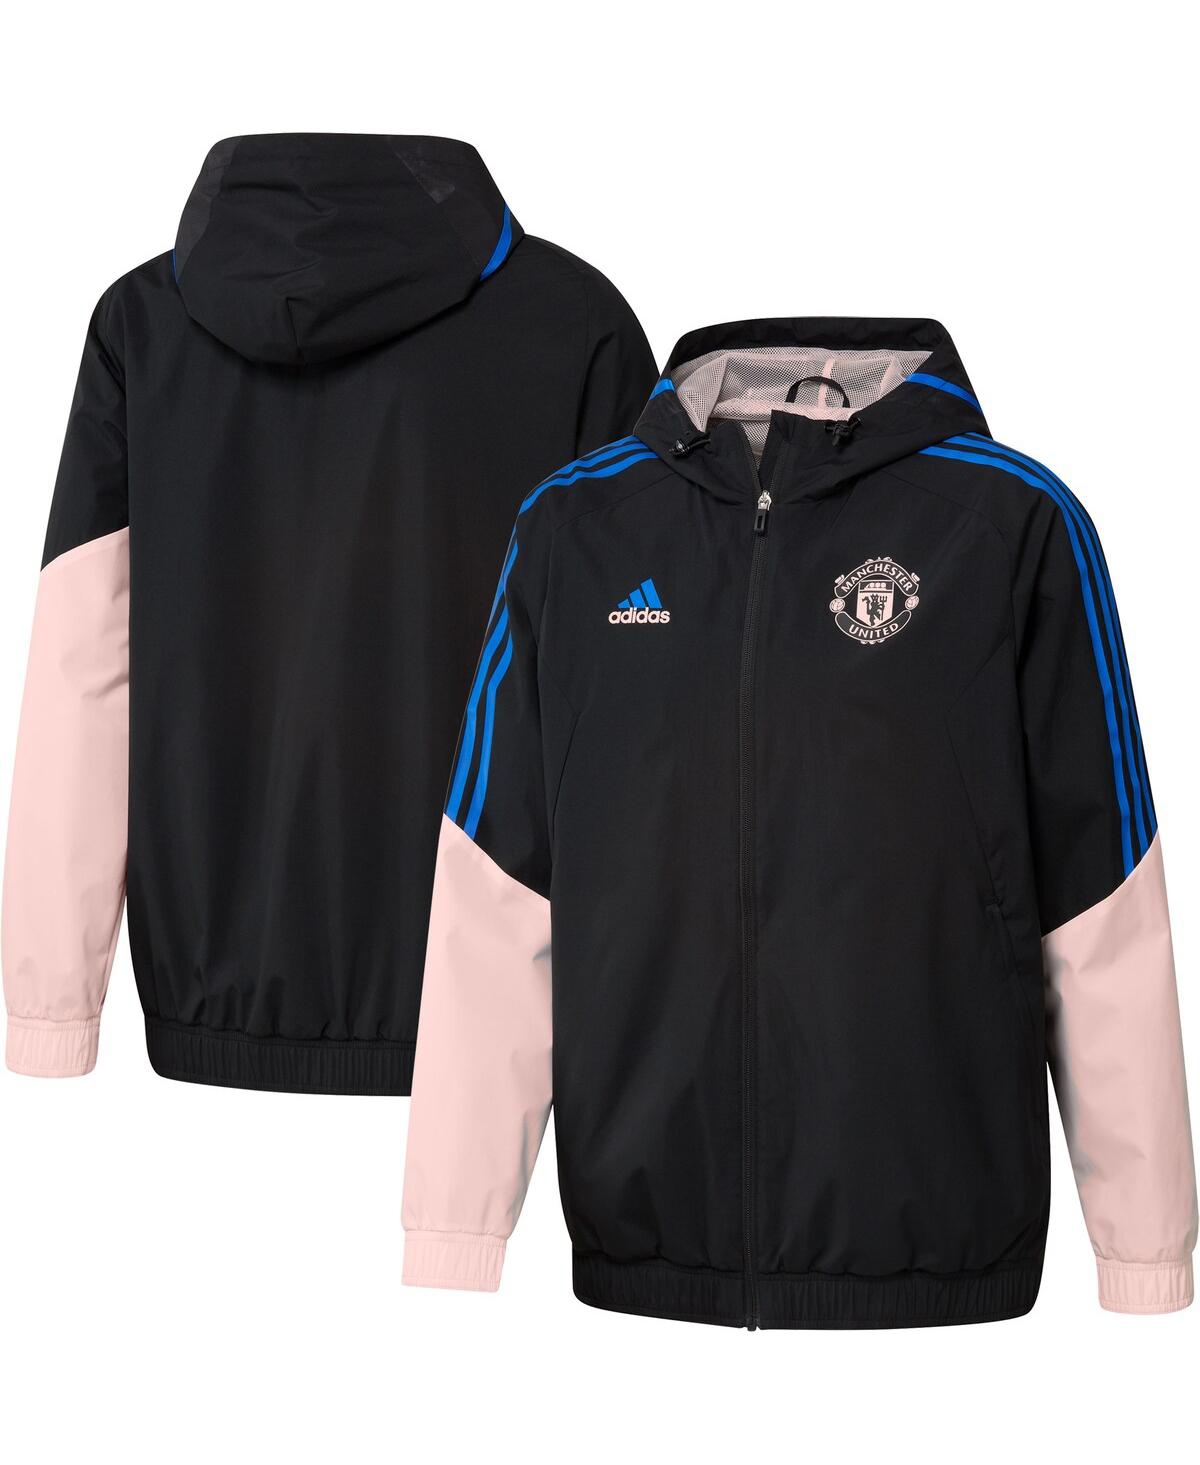 Shop Adidas Originals Men's Adidas Black Manchester United Training All-weather Raglan Full-zip Hoodie Jacket